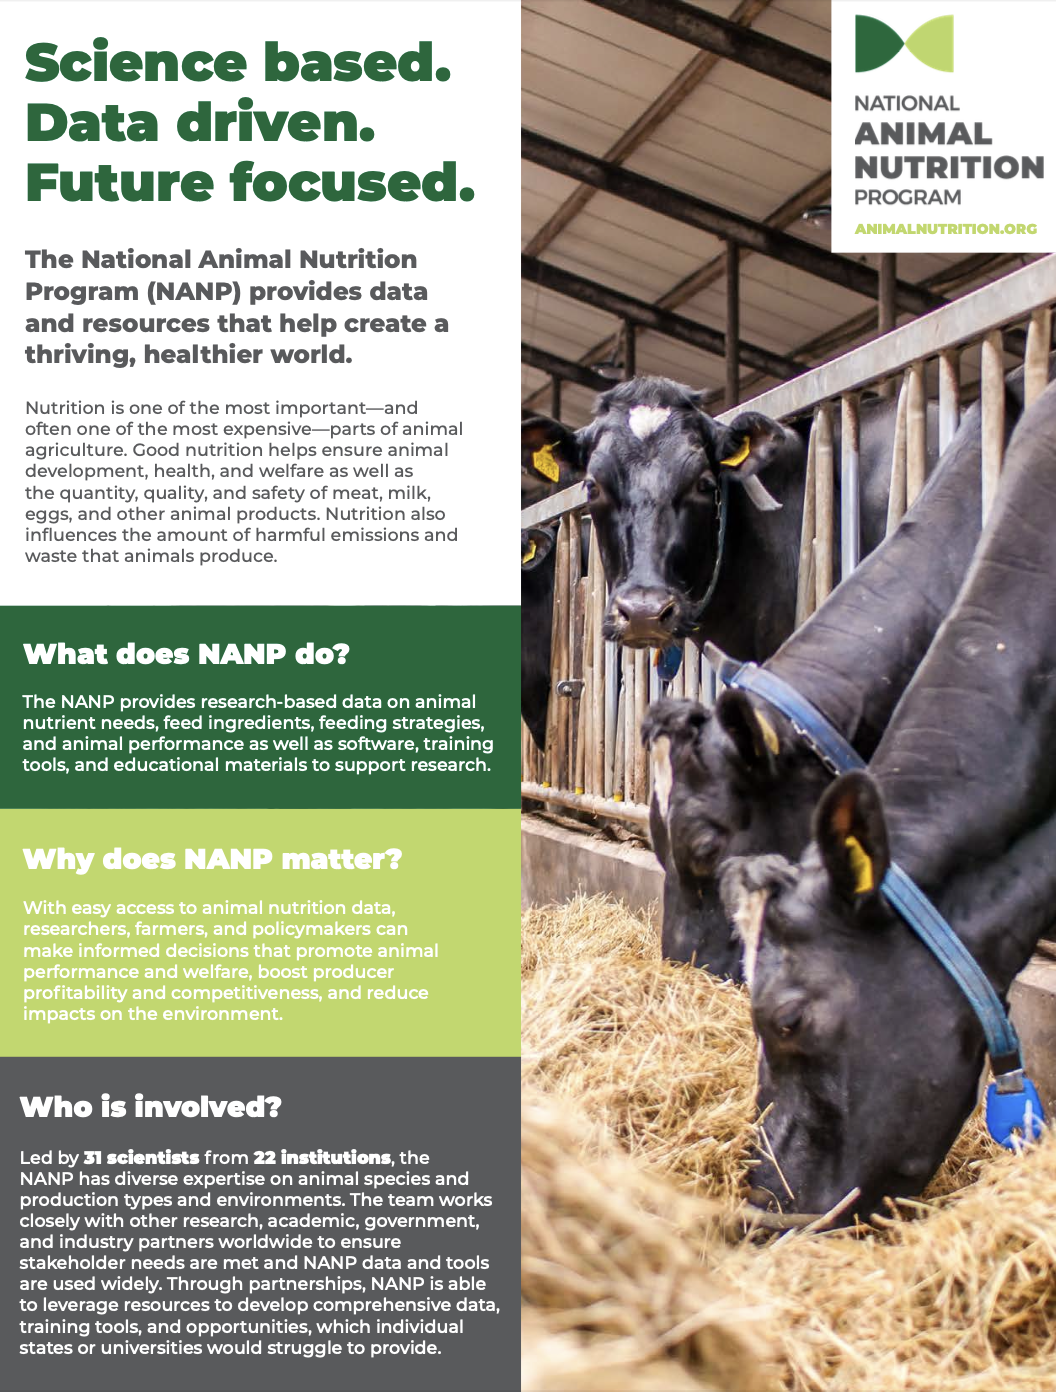 NANP Materials | National Animal Nutrition Program